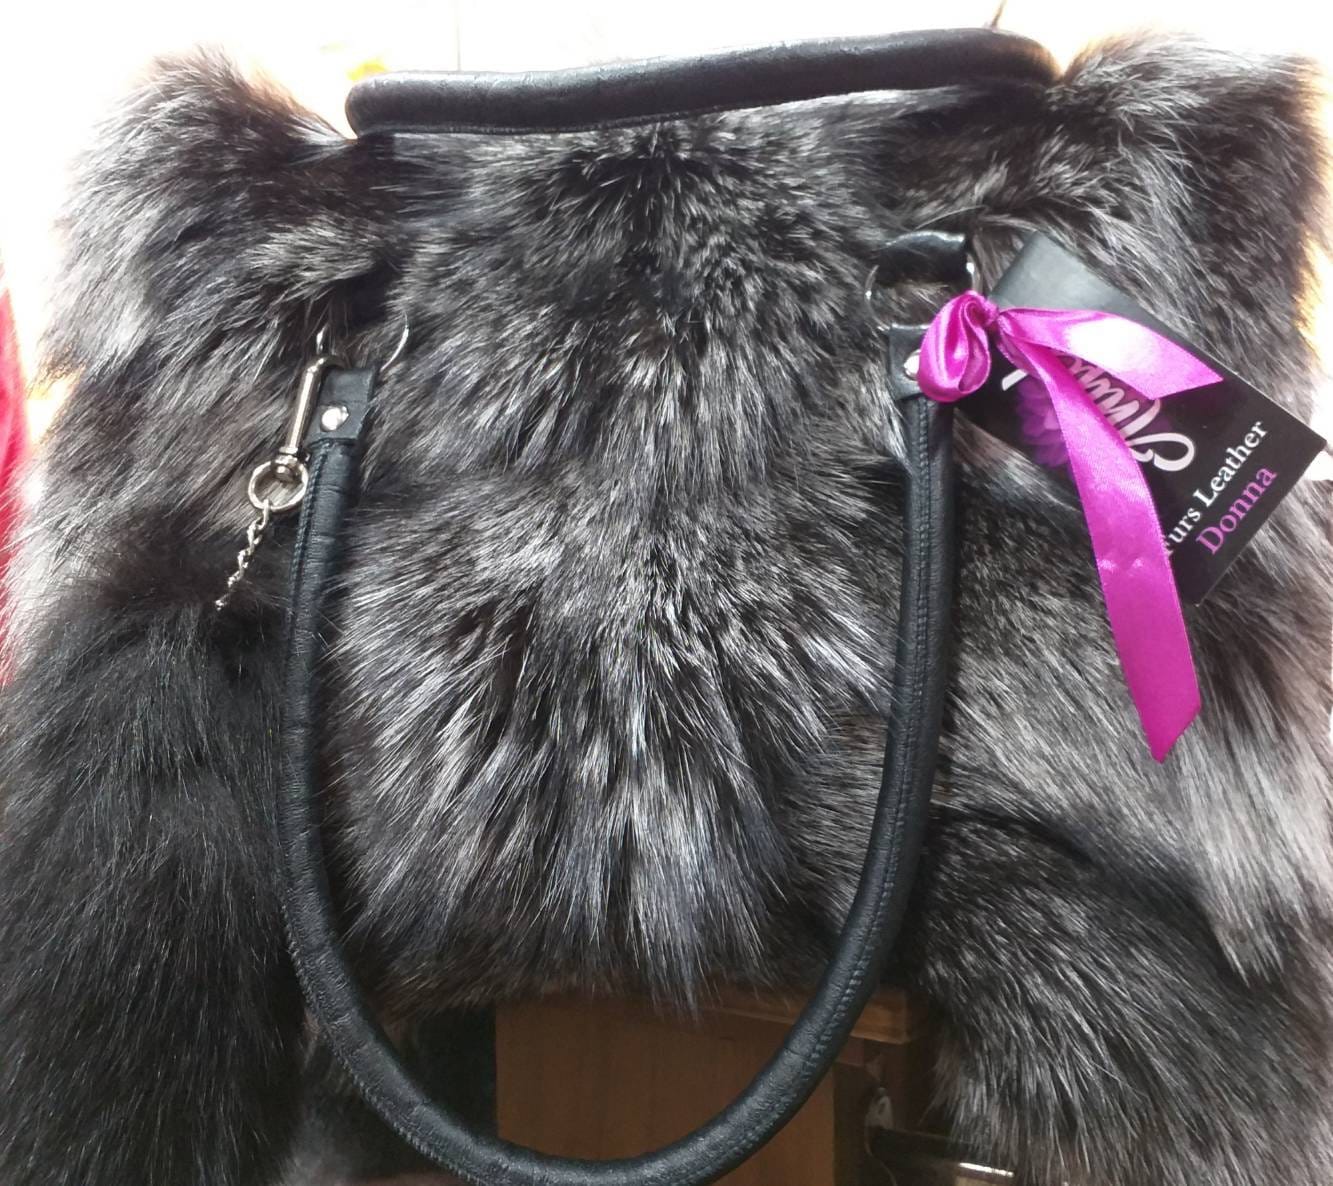  URSFUR Genuiene Mink Fur Handbag with Leather Accents